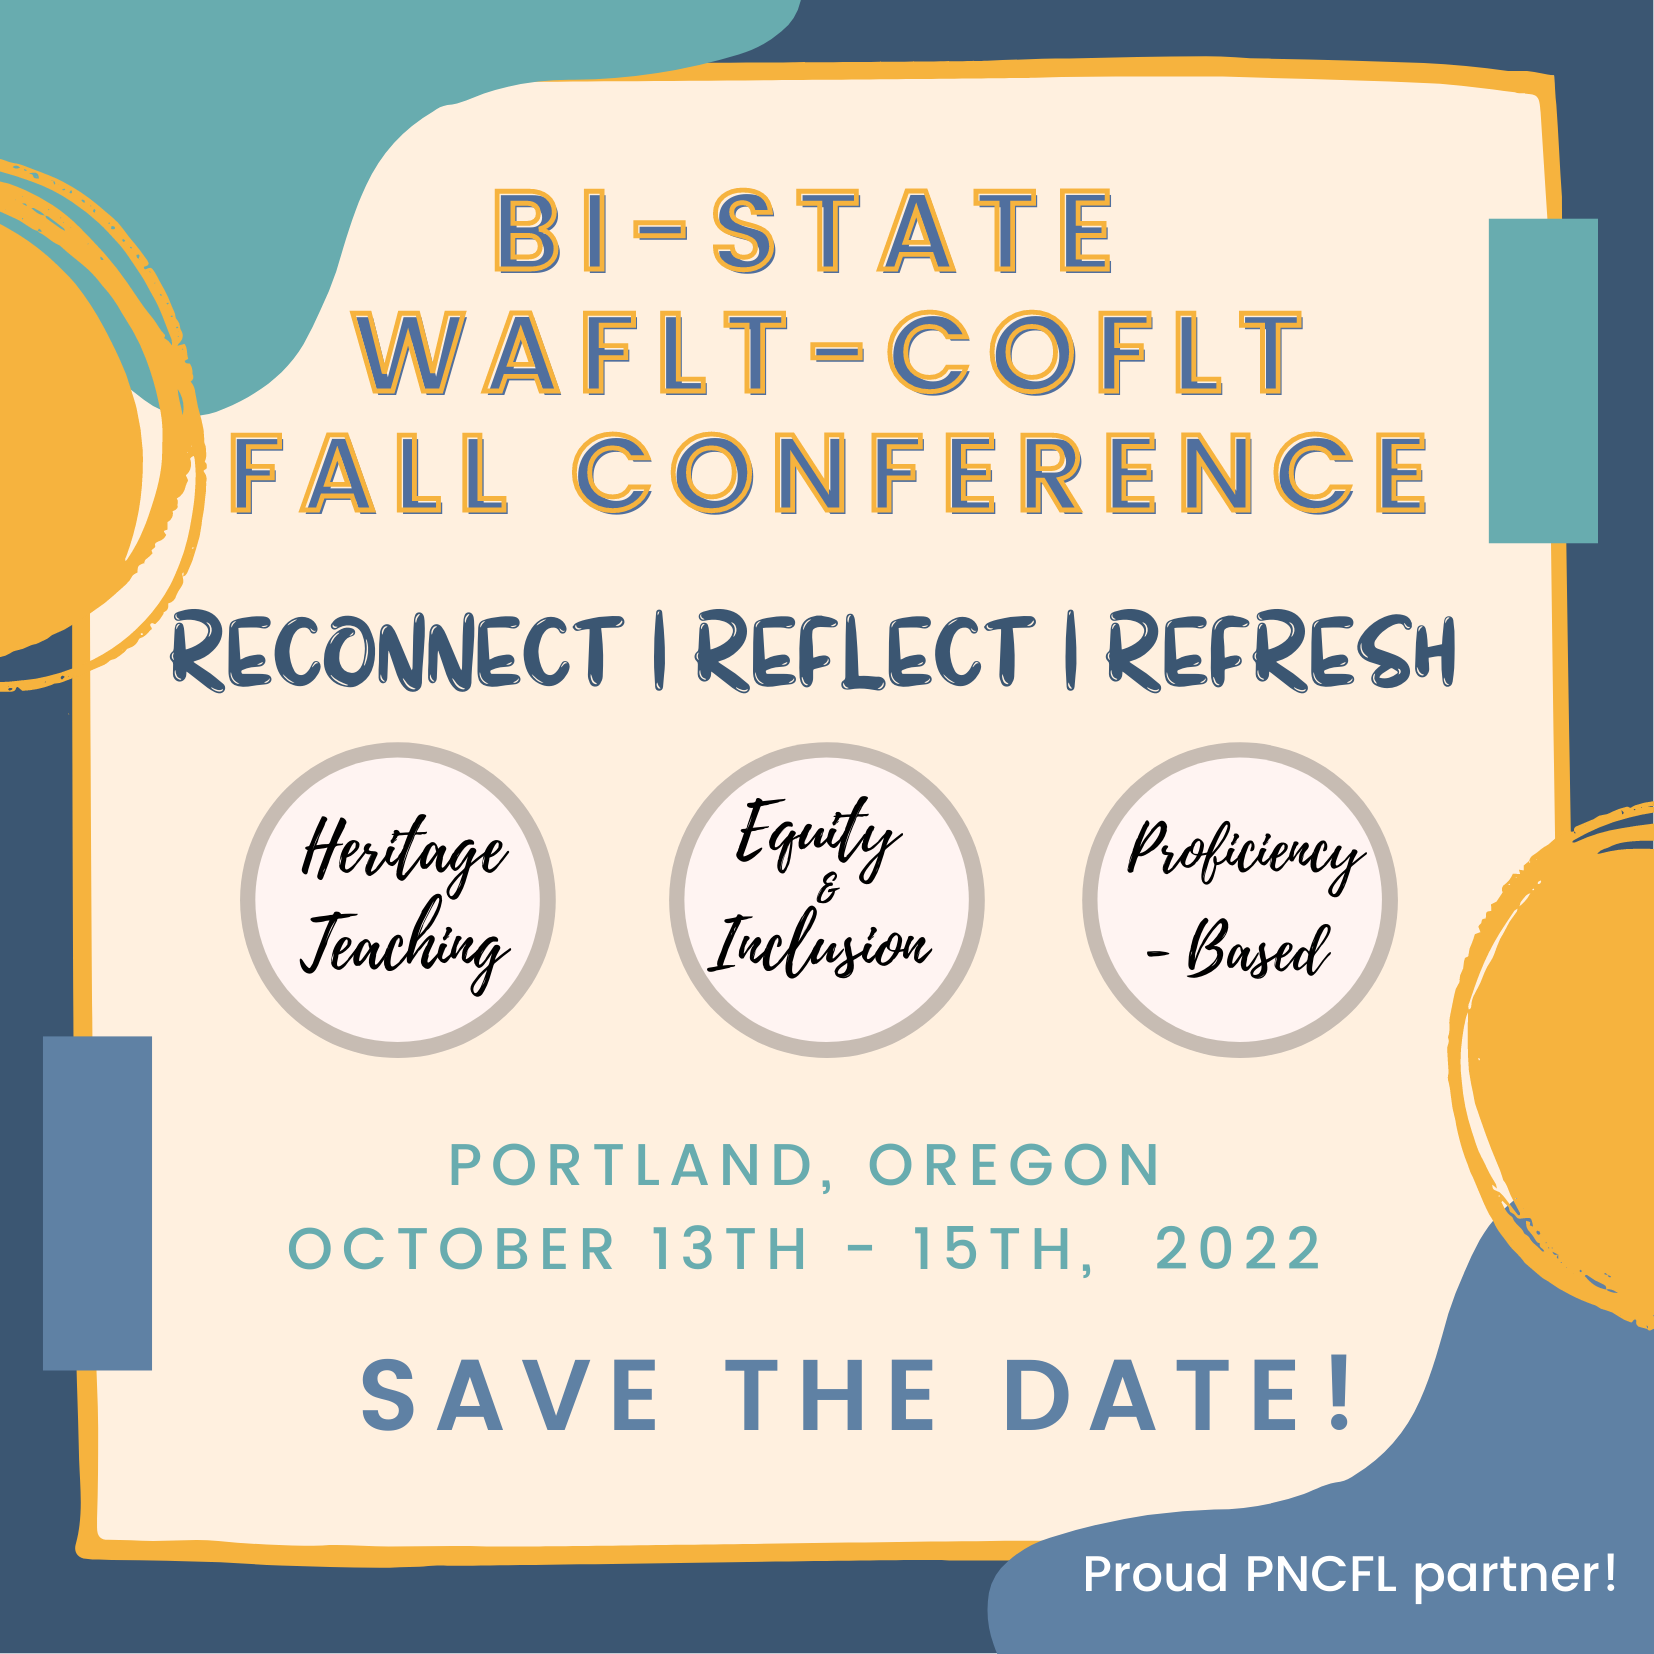 WAFLT-COFLT Conference 2022